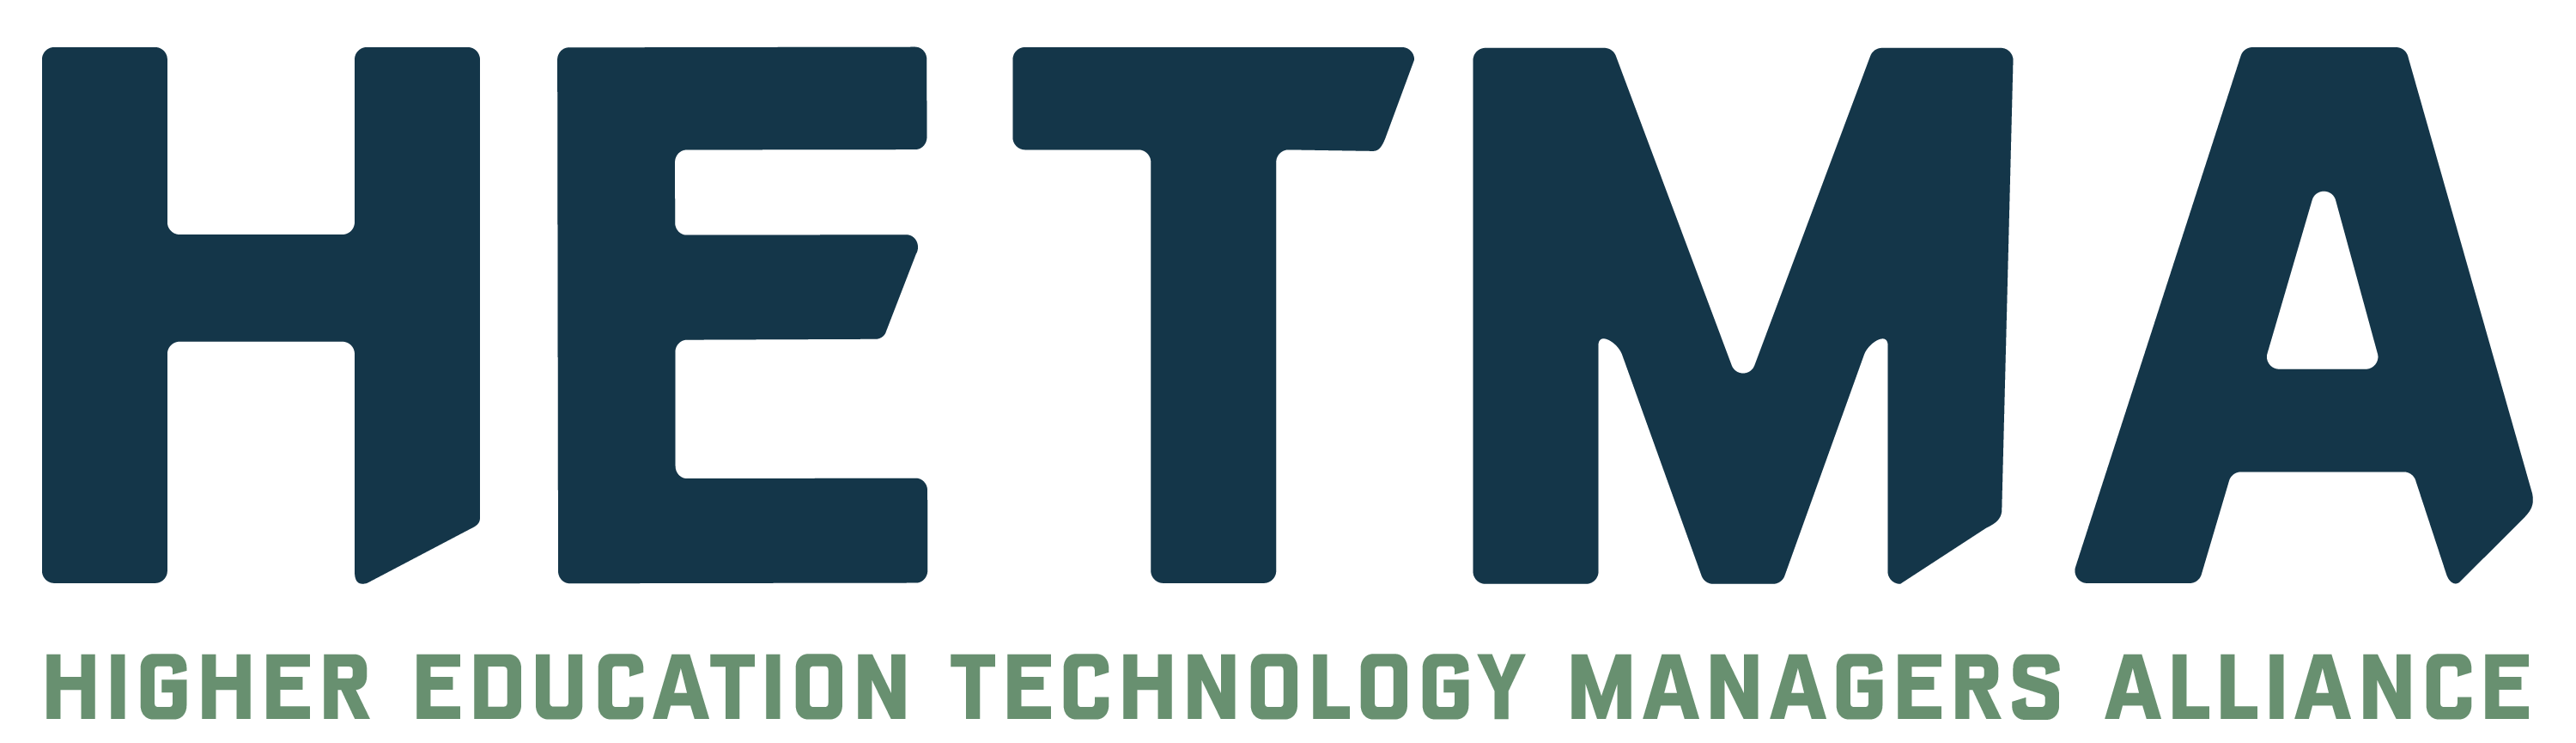 HETMA logo Higher Ed Technology Managers Alliance